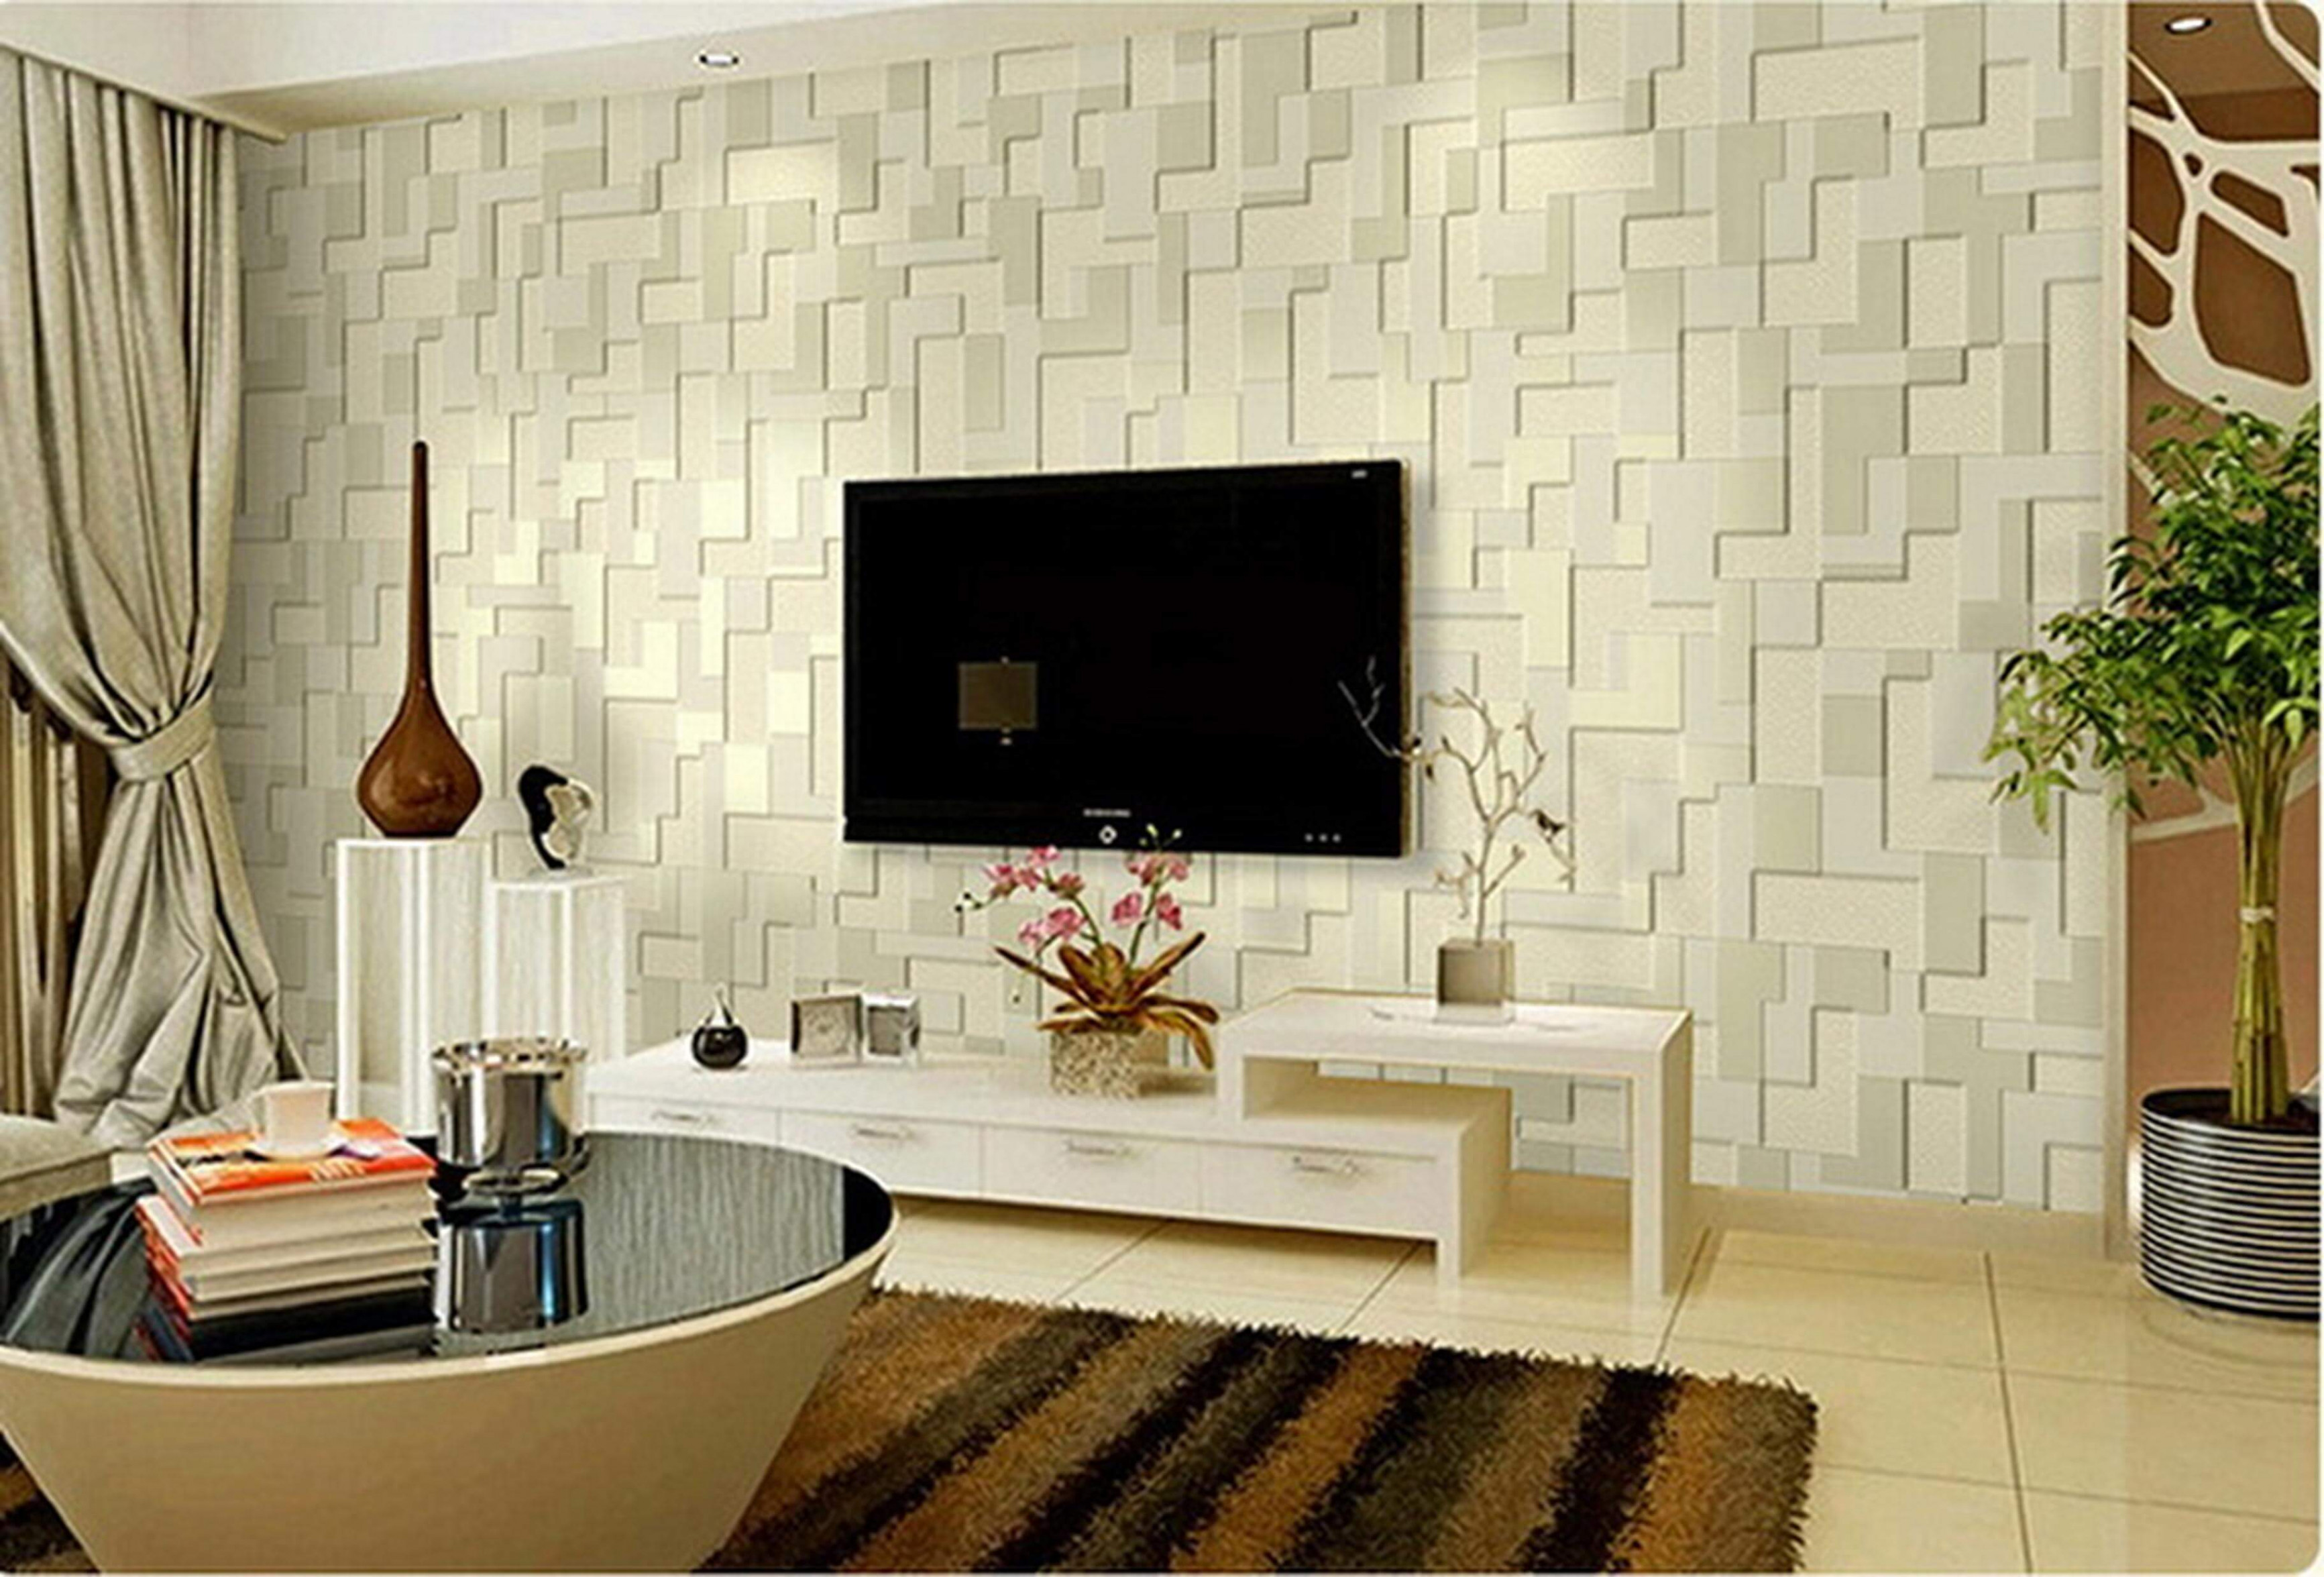 3d Wallpaper Designs For Living Room Best Of Modern Designs For